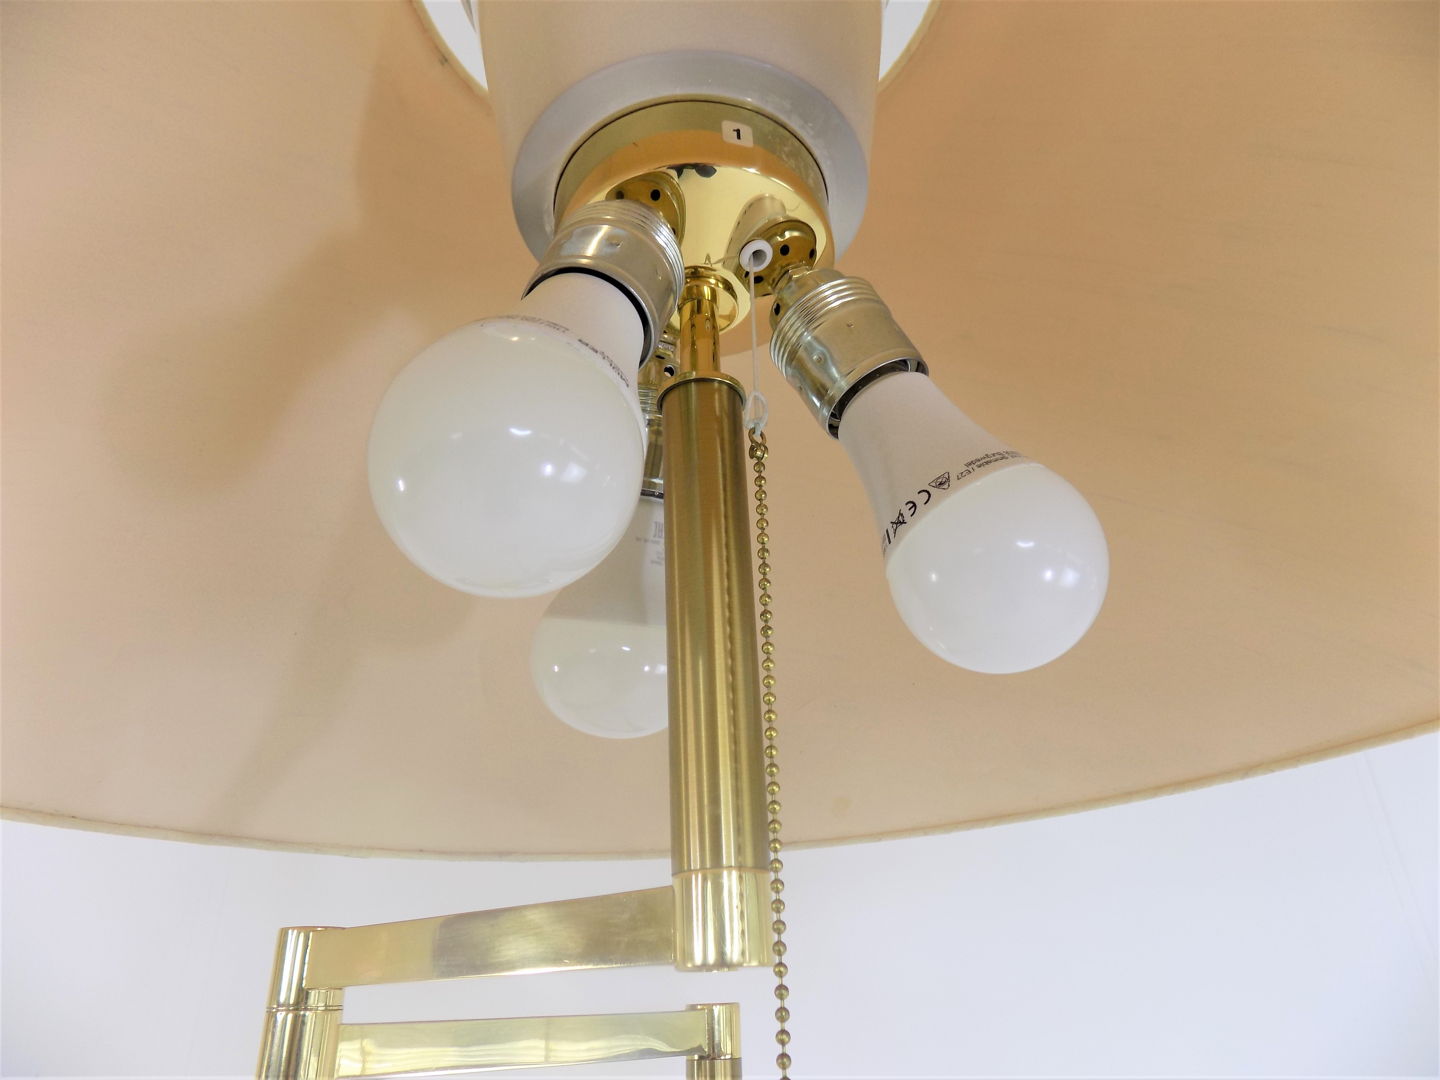 Brass floor lamp with swivel arm Mid Century Modern